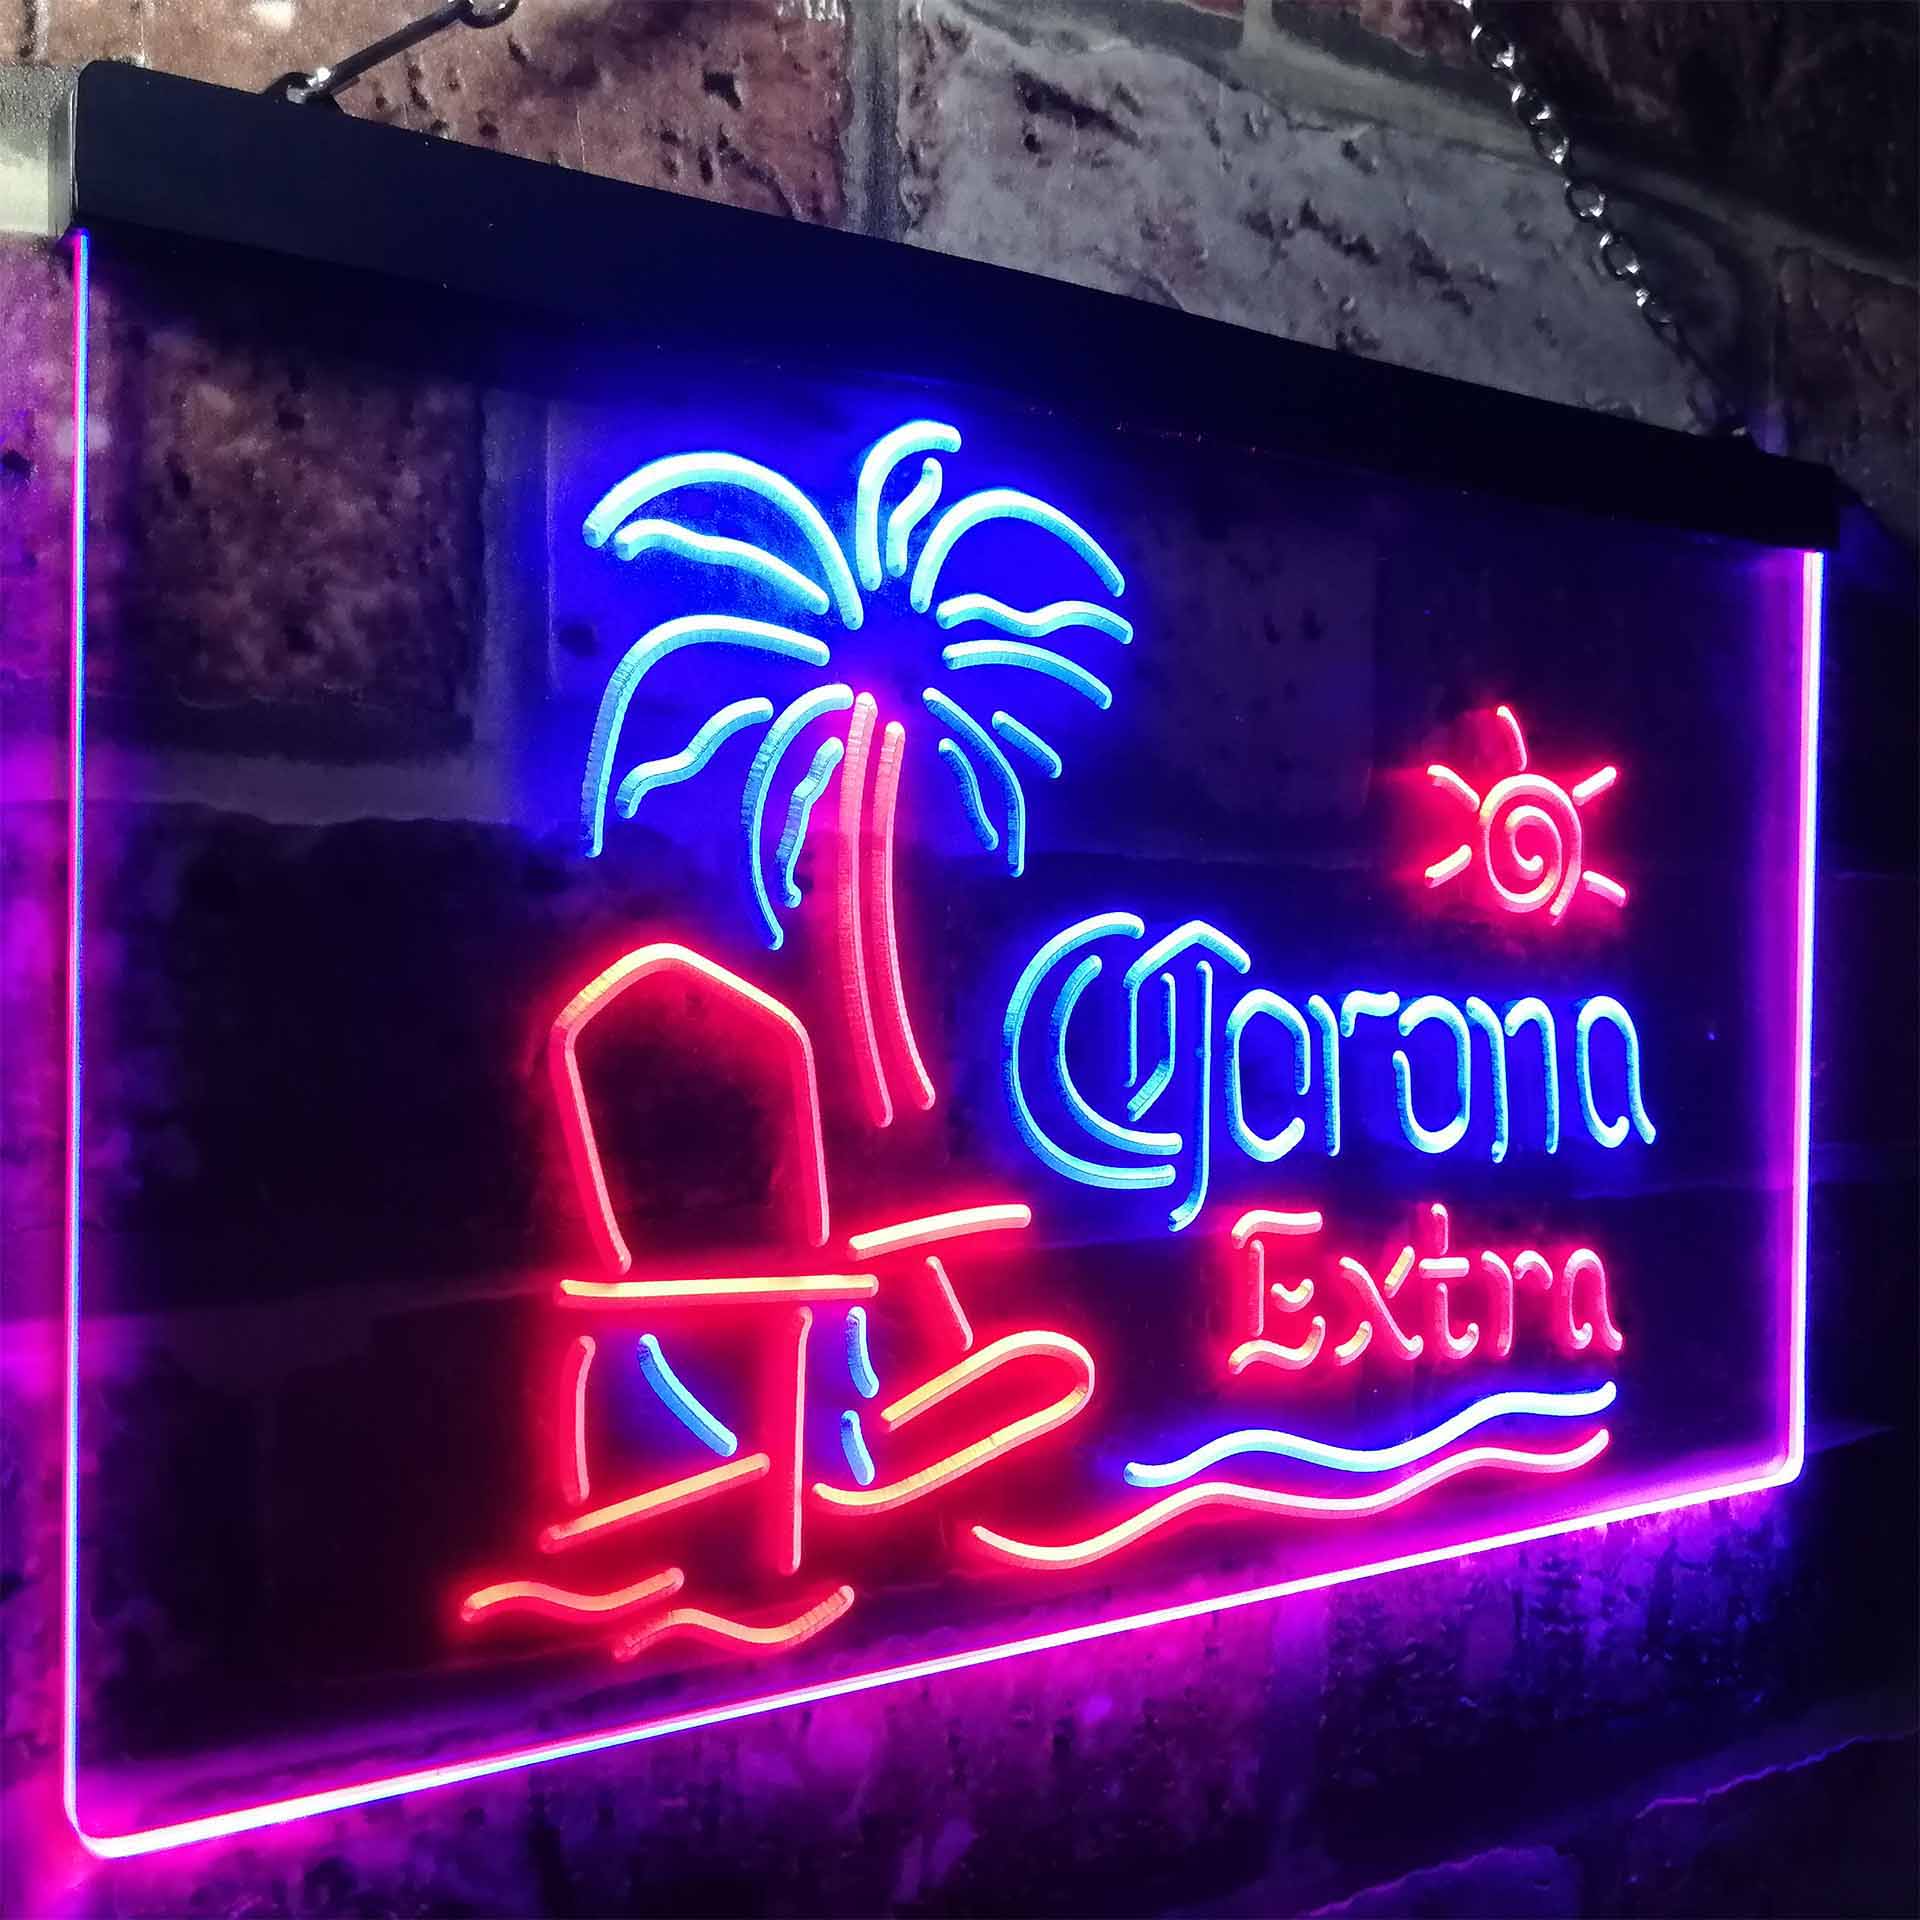 Coronas Extras Palms Trees Beach Chair LED Neon Sign